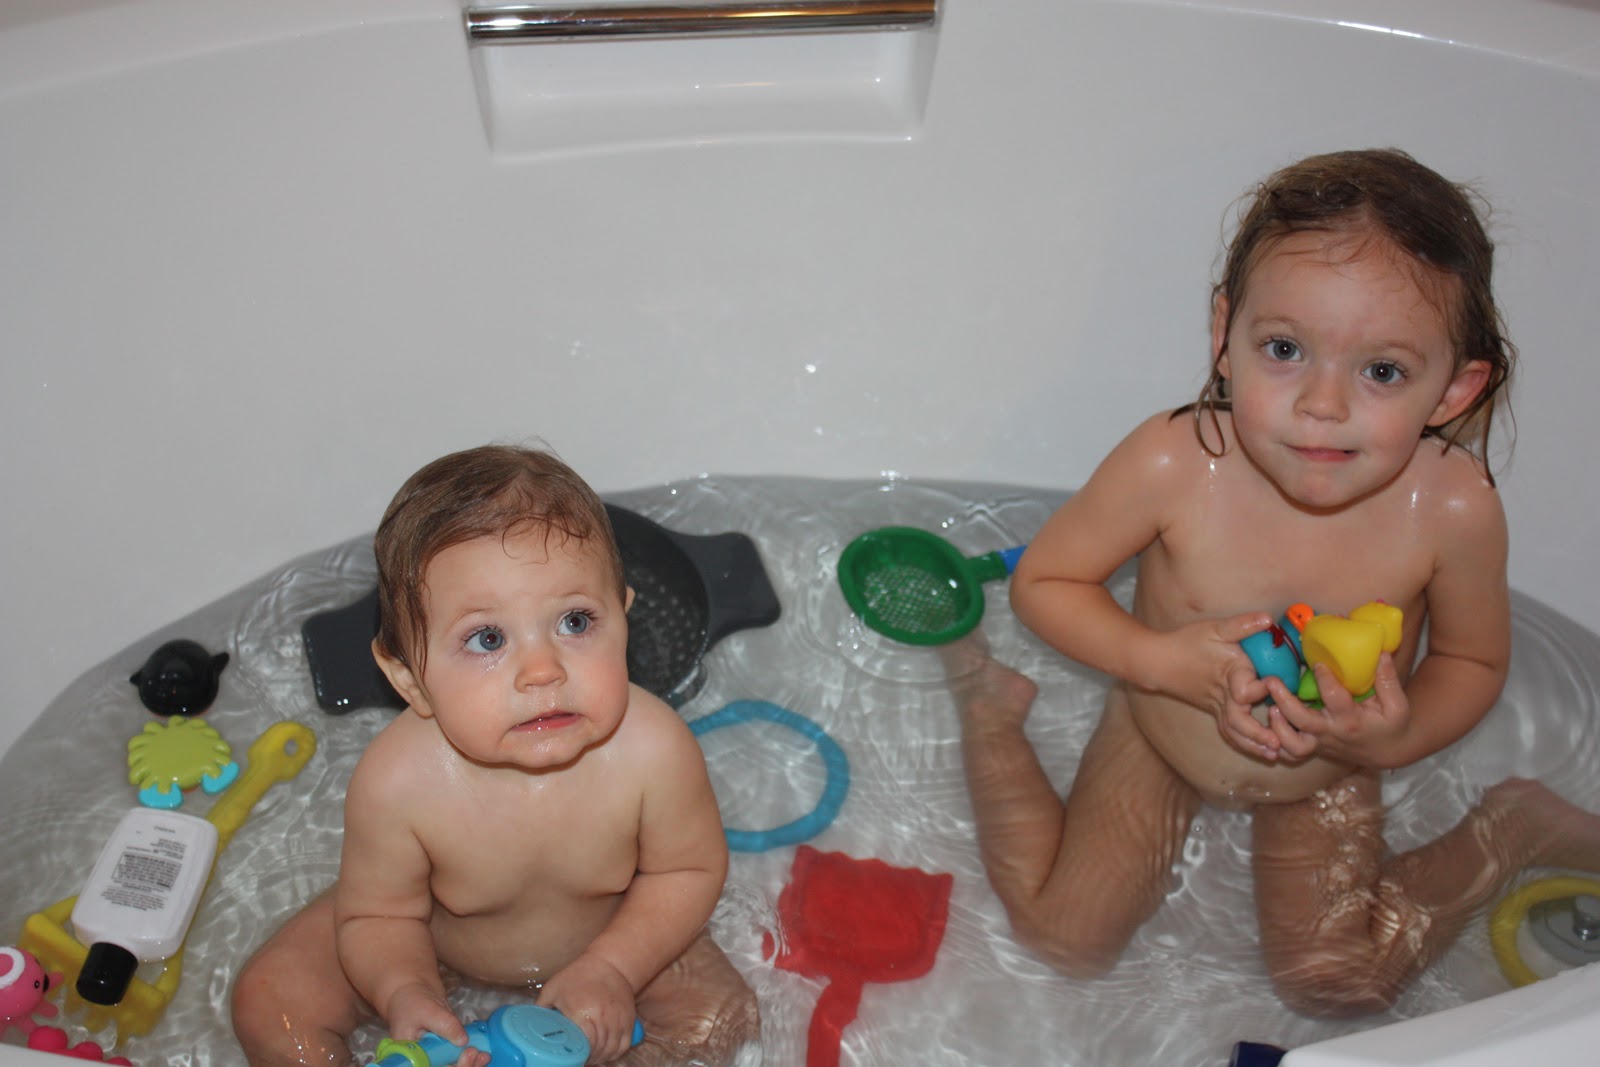 Knierim Family Bath Time Fun